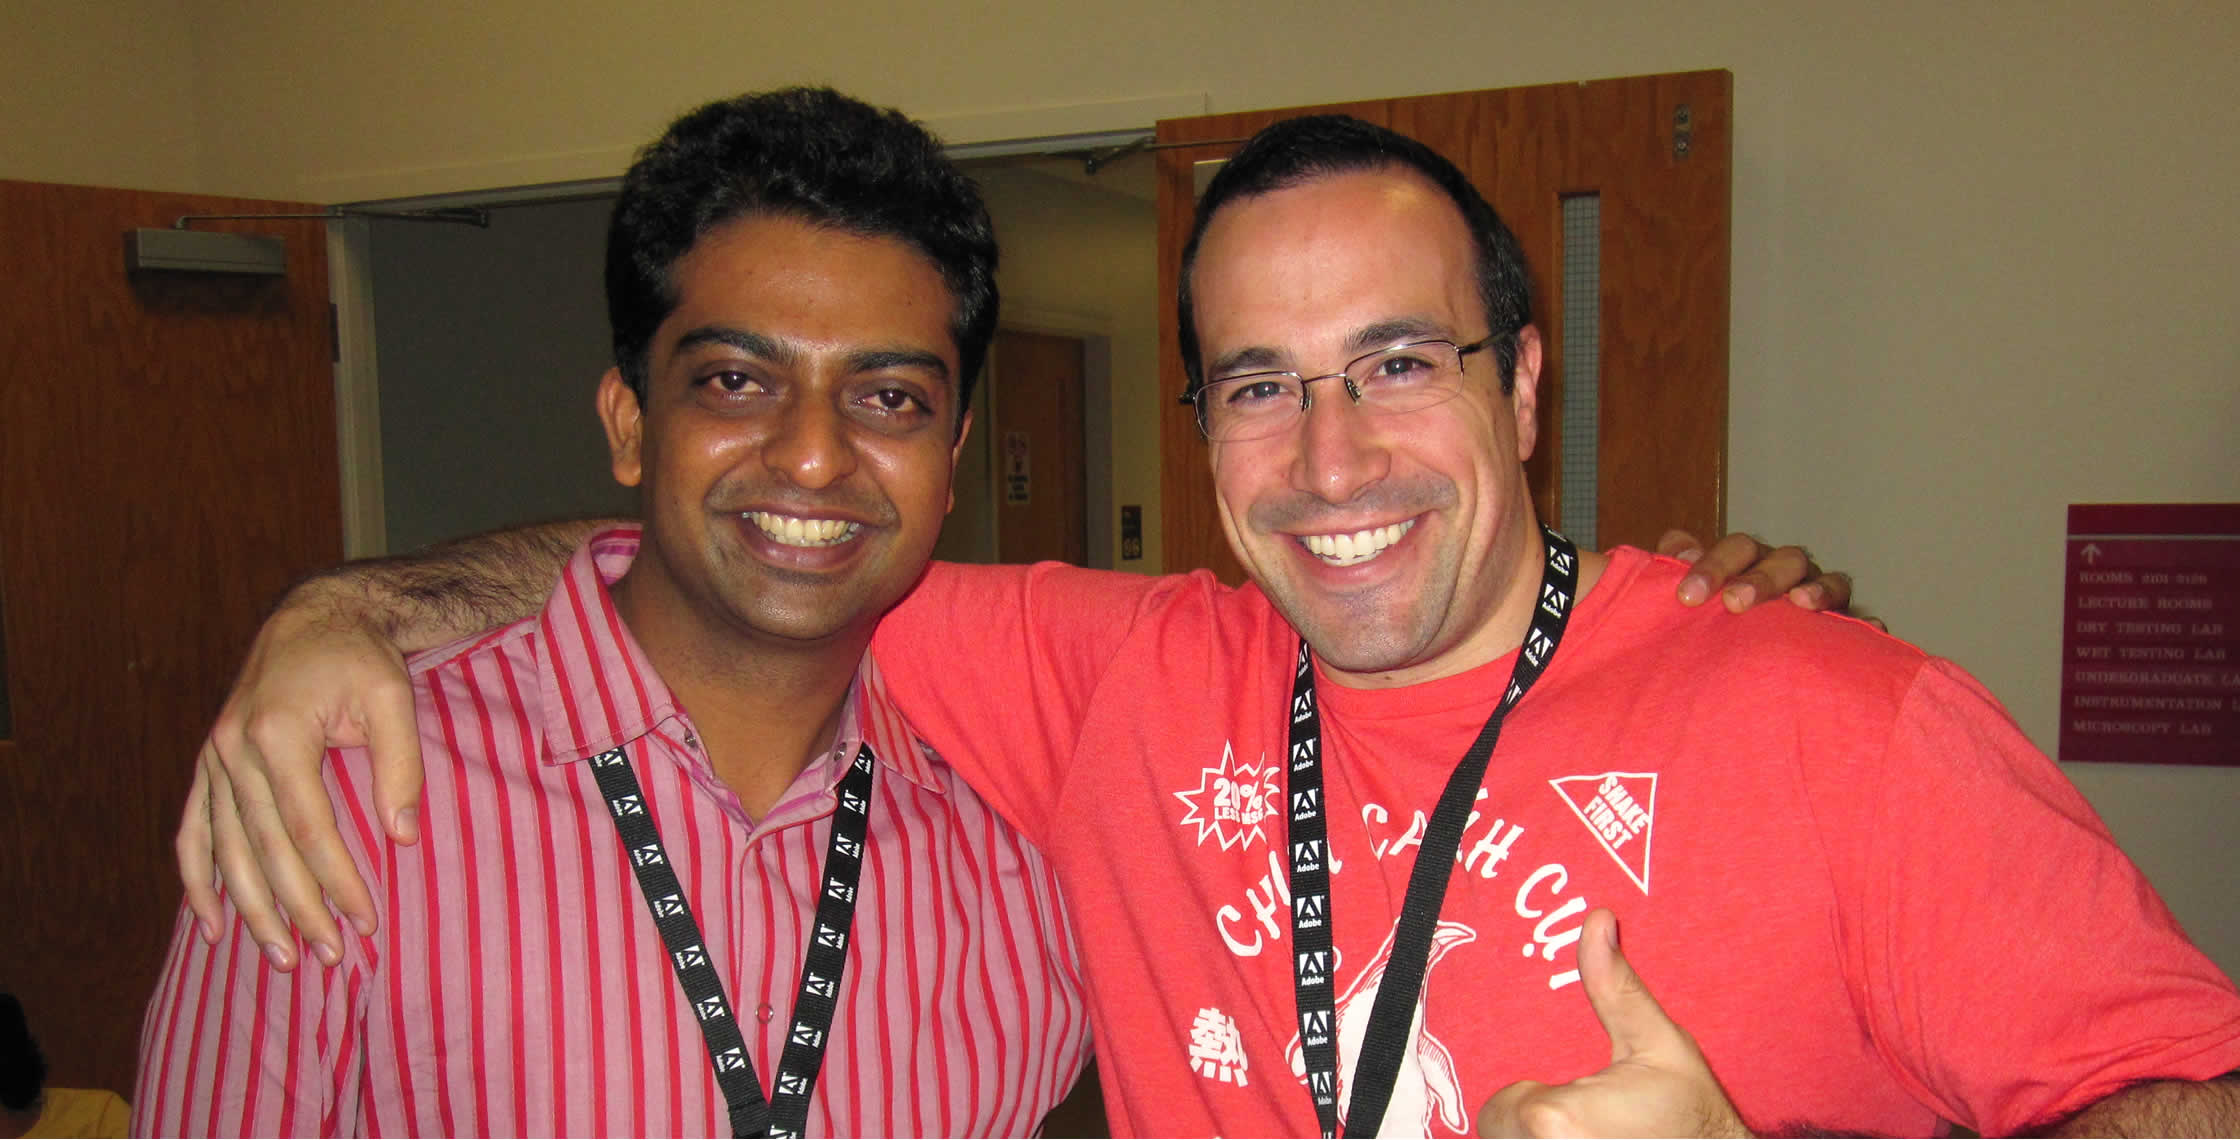 Ben Nadel at NCDevCon 2011 (Raleigh, NC) with: Rakshith Naresh